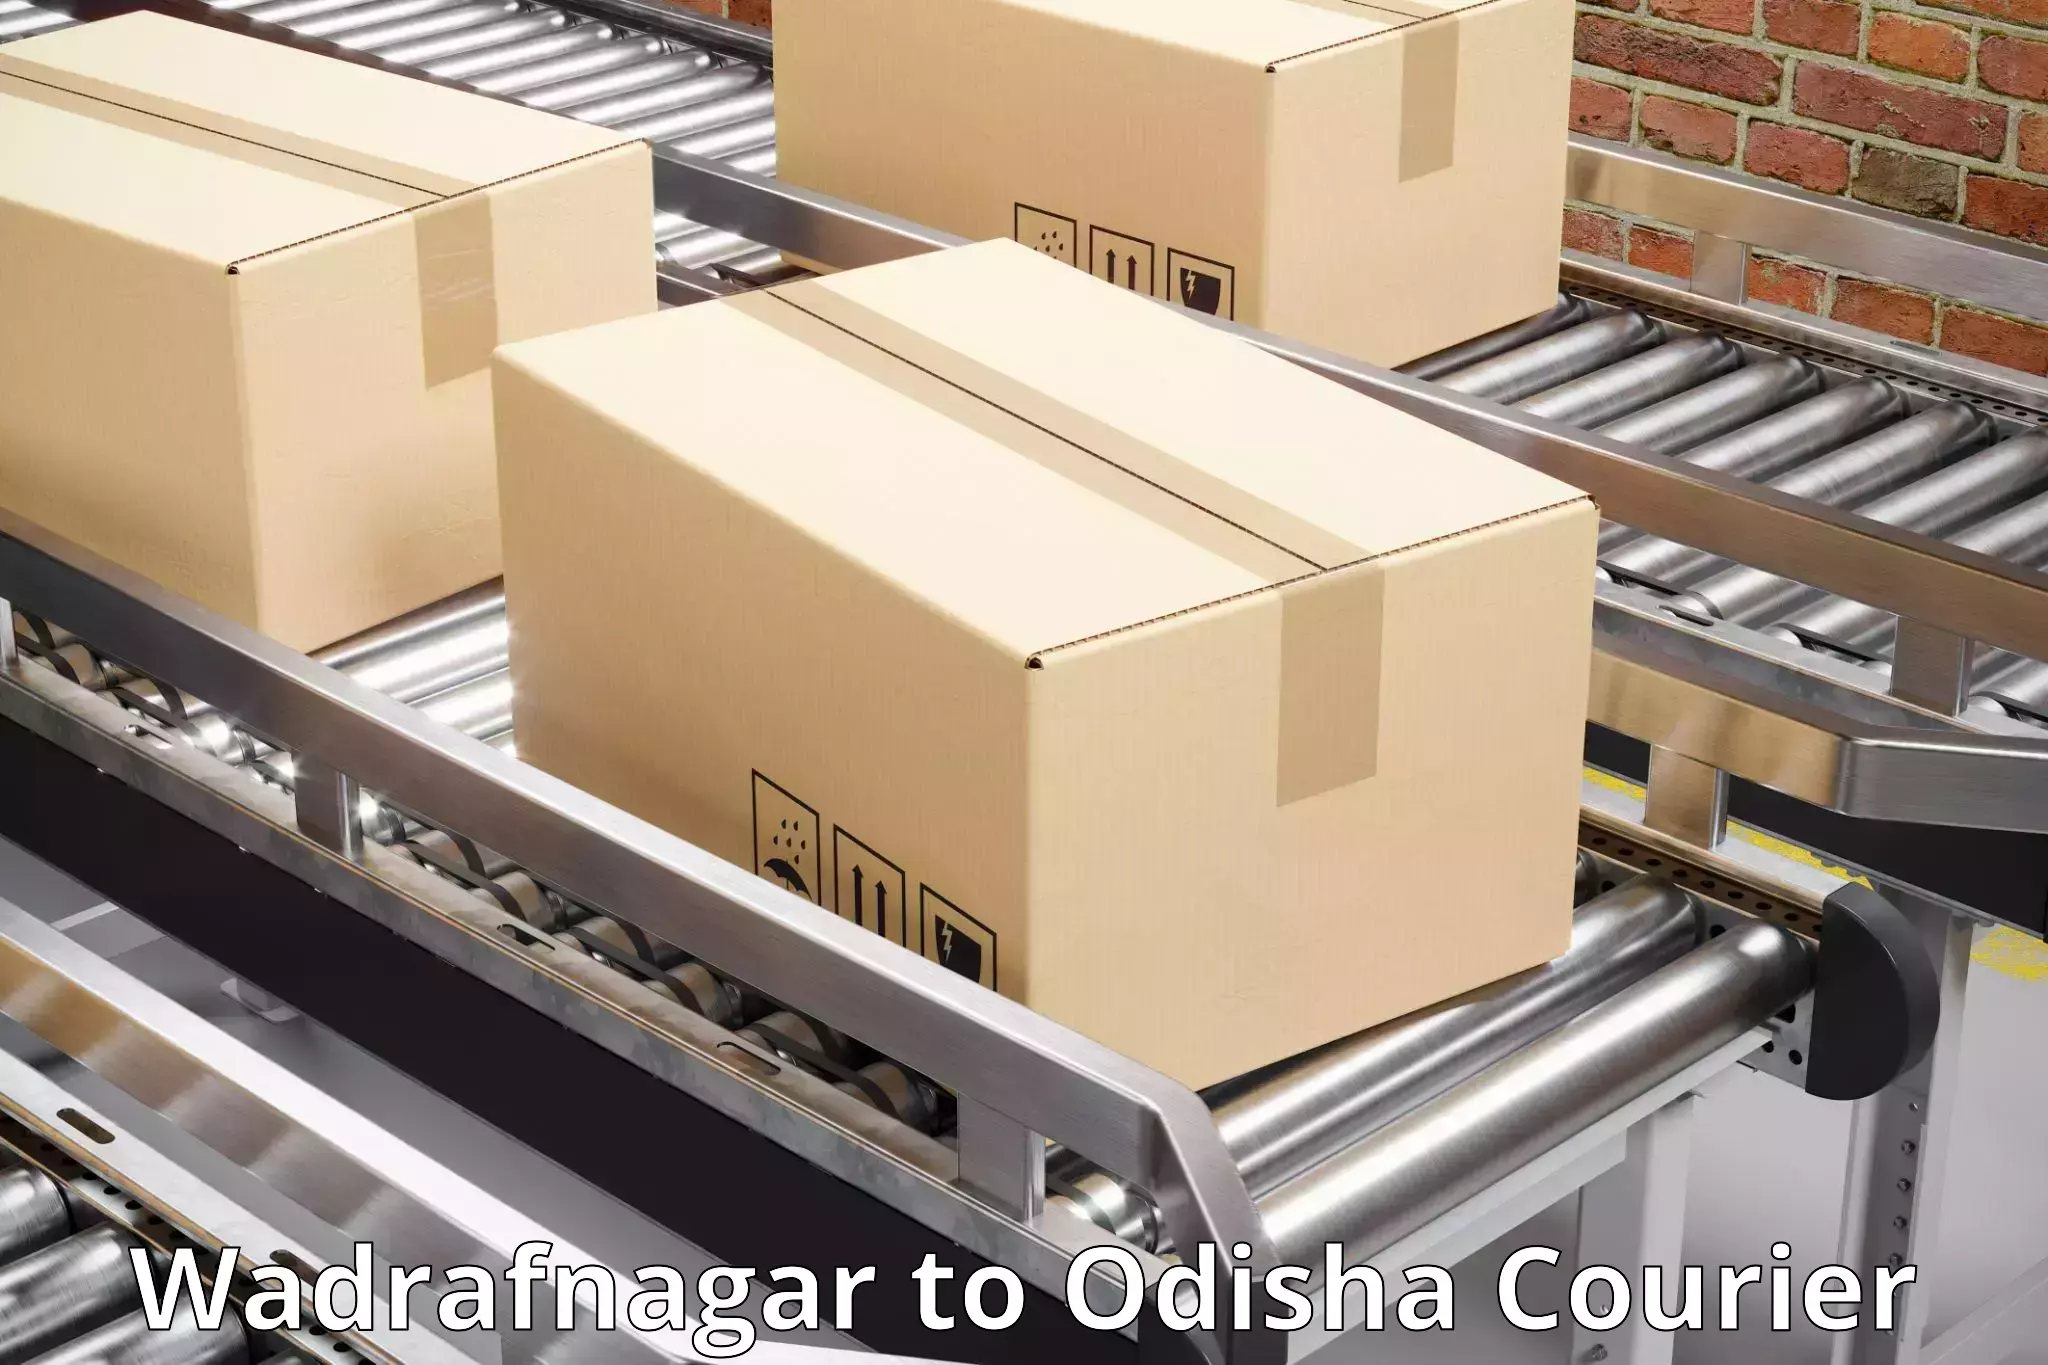 Customized delivery options Wadrafnagar to Jaraka